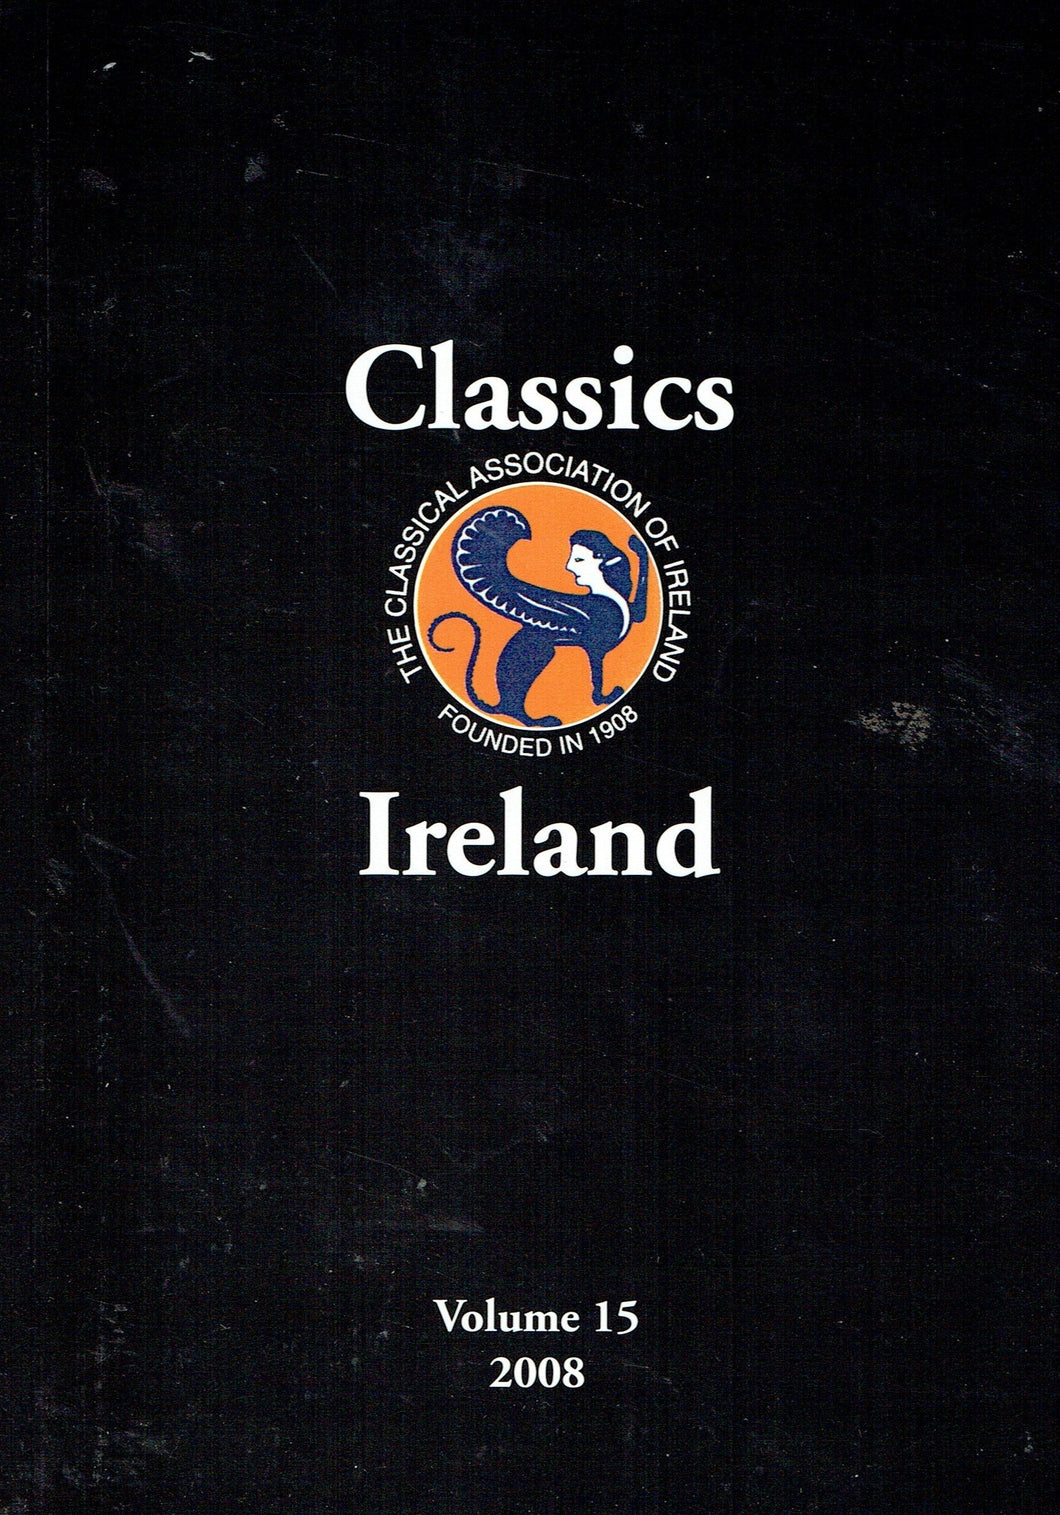 Classics Ireland - Journal of the Classical Association of Ireland, Volume 15, 2008